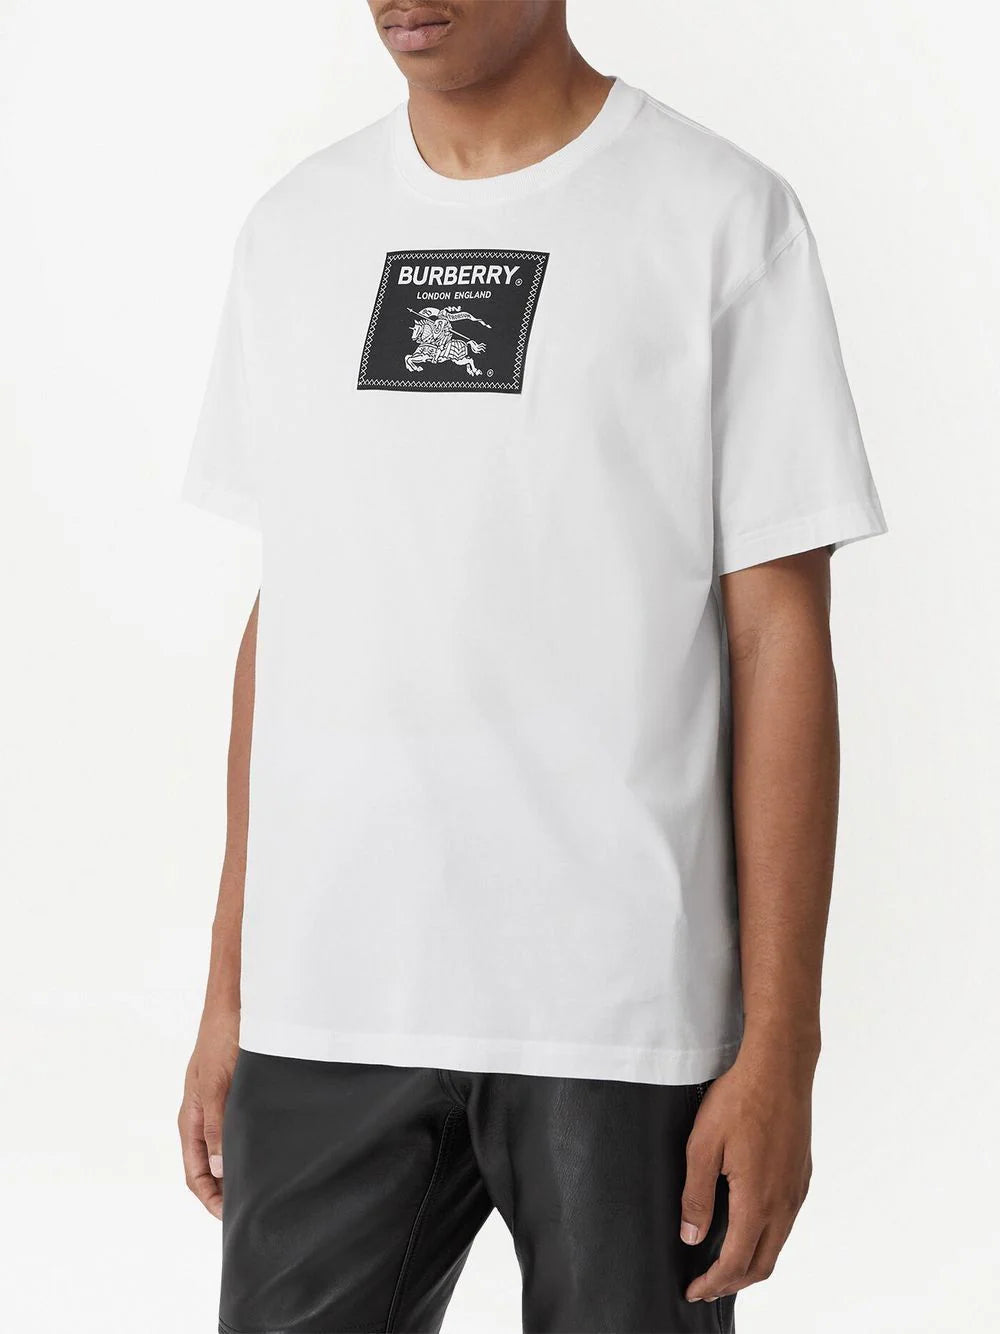 Burberry Prorsum Label EKD Appliqued Logo T-Shirt White 8064397